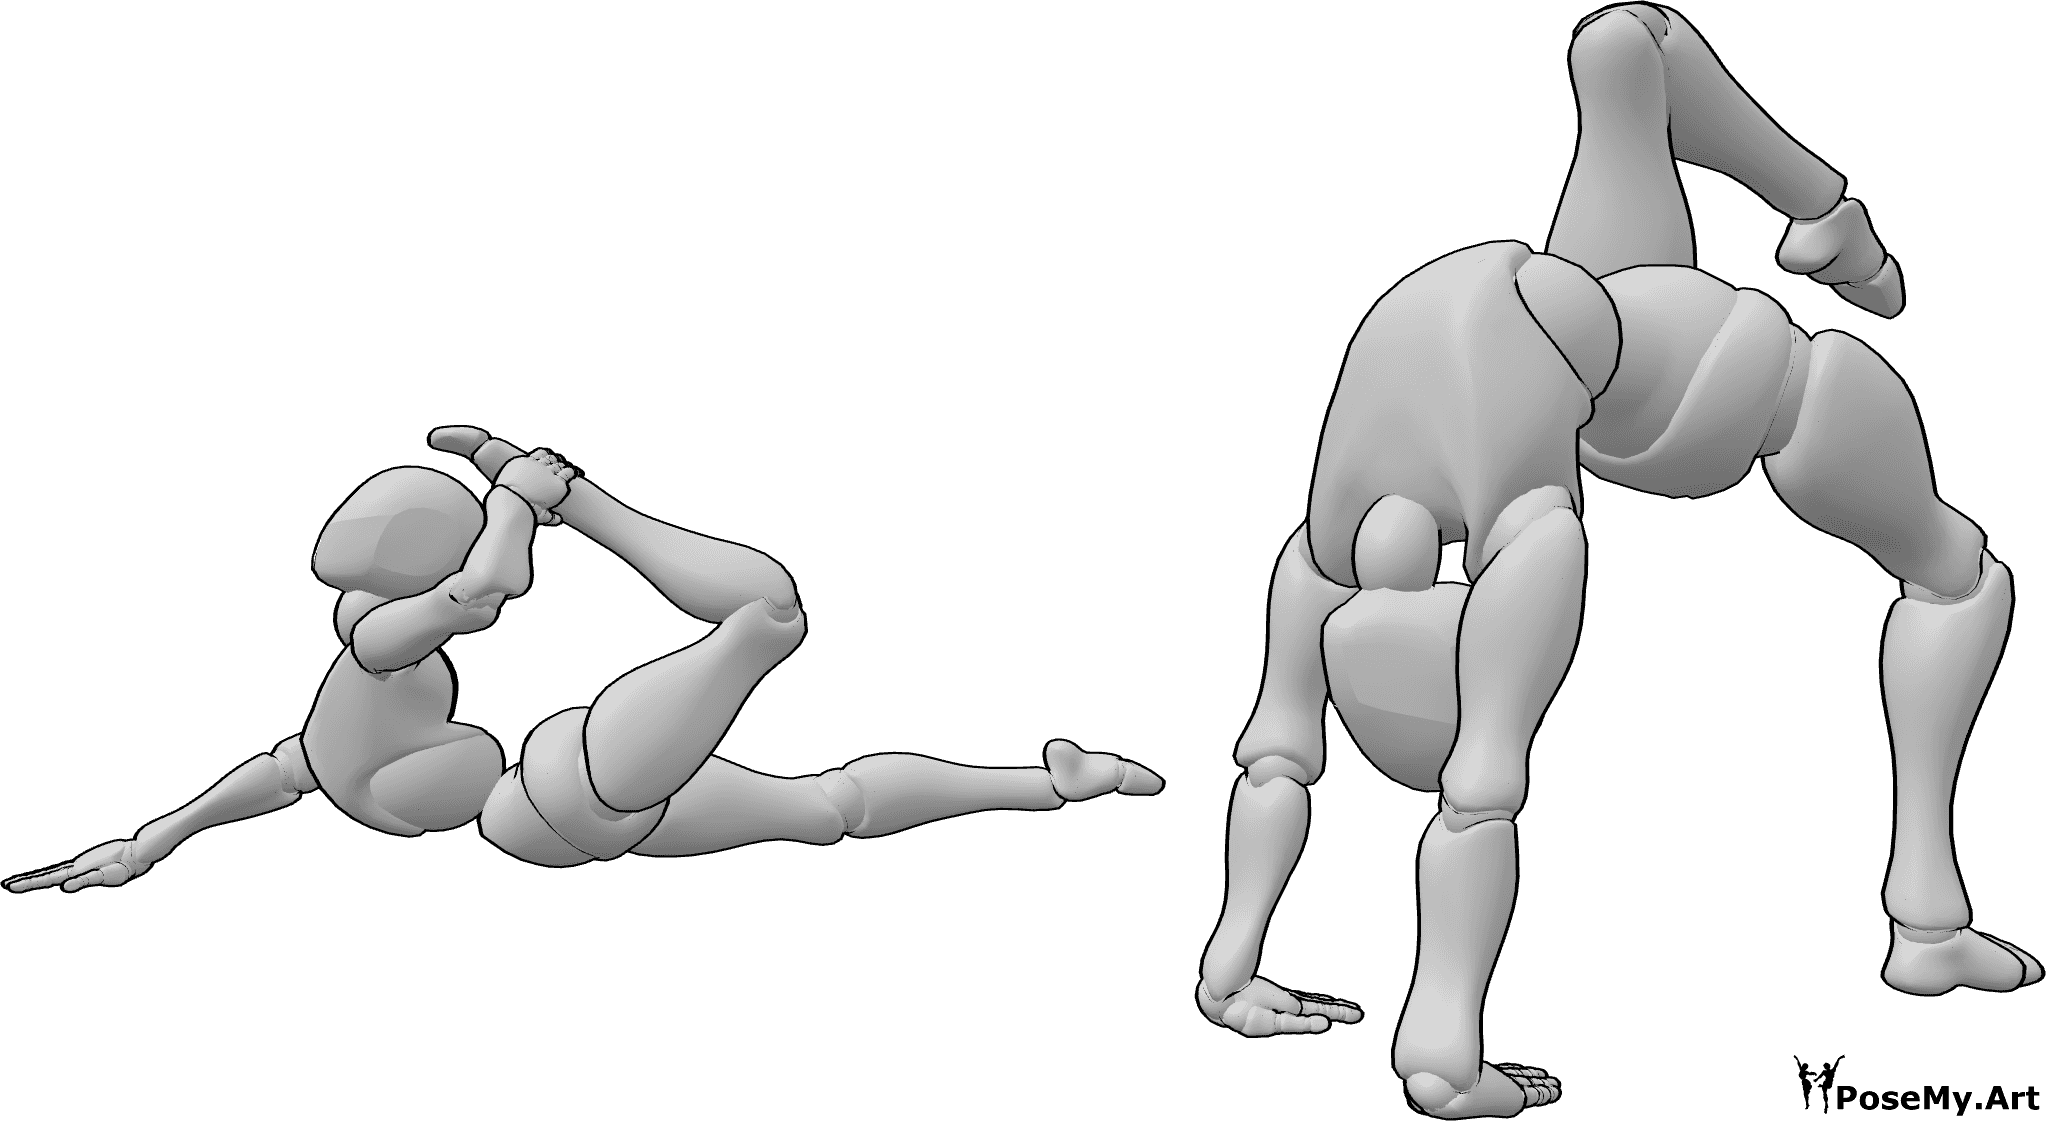 Pose Reference - Female gymnastics pose - Flexible athletic females are exercising gymnastics and yoga poses